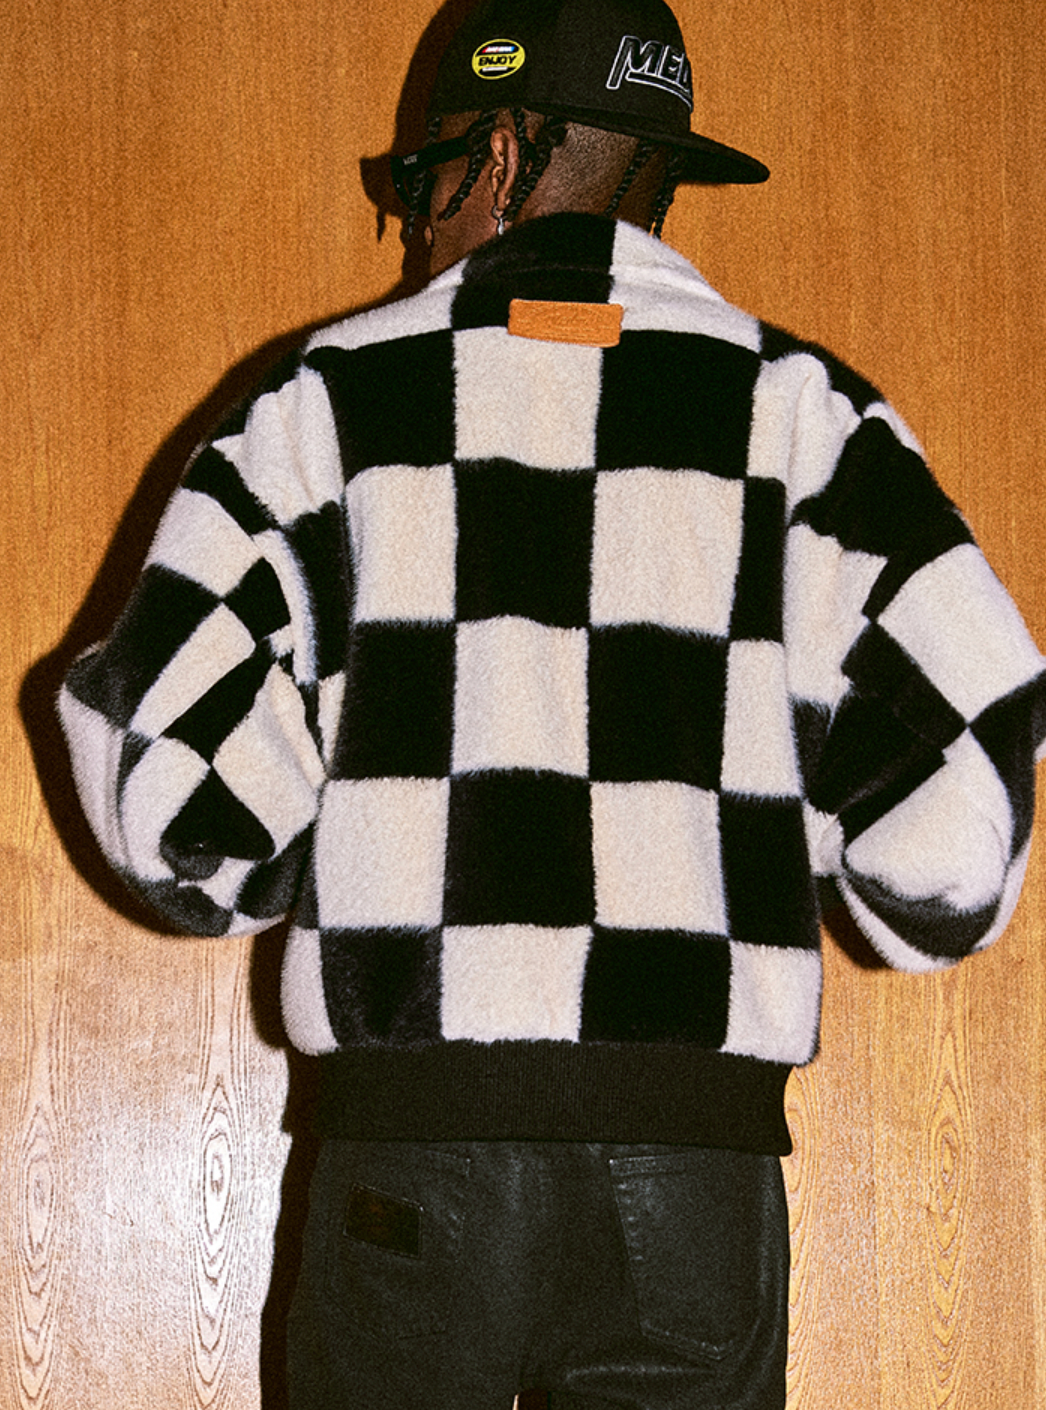 MEDM Fur Checkerboard Sherpa Fleece Jacket